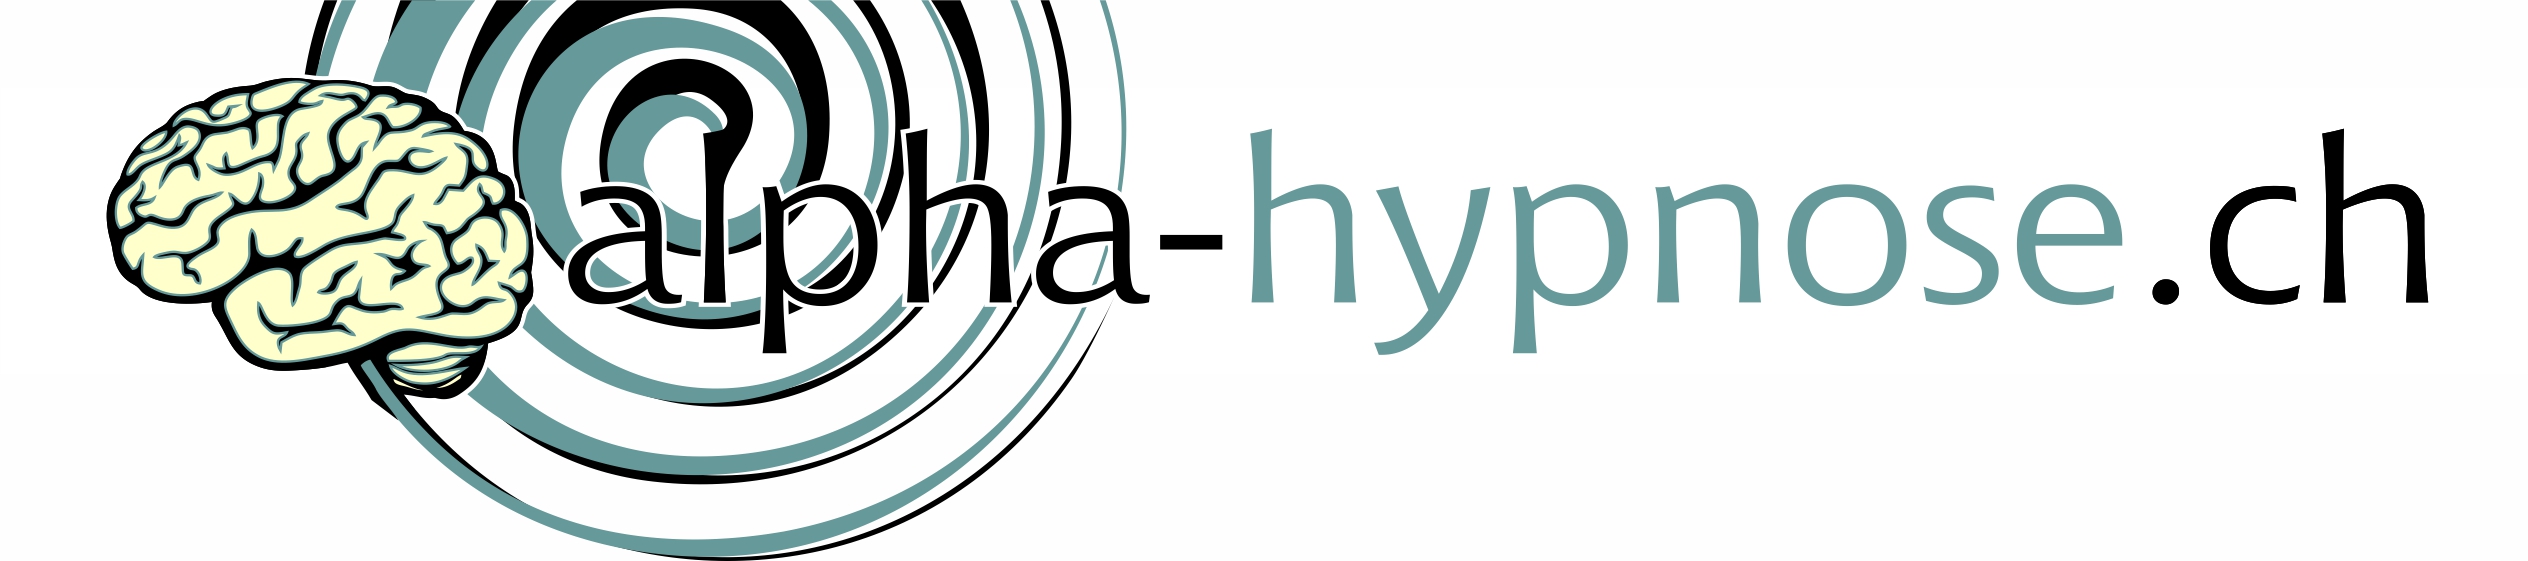 alpha-hypnose.ch